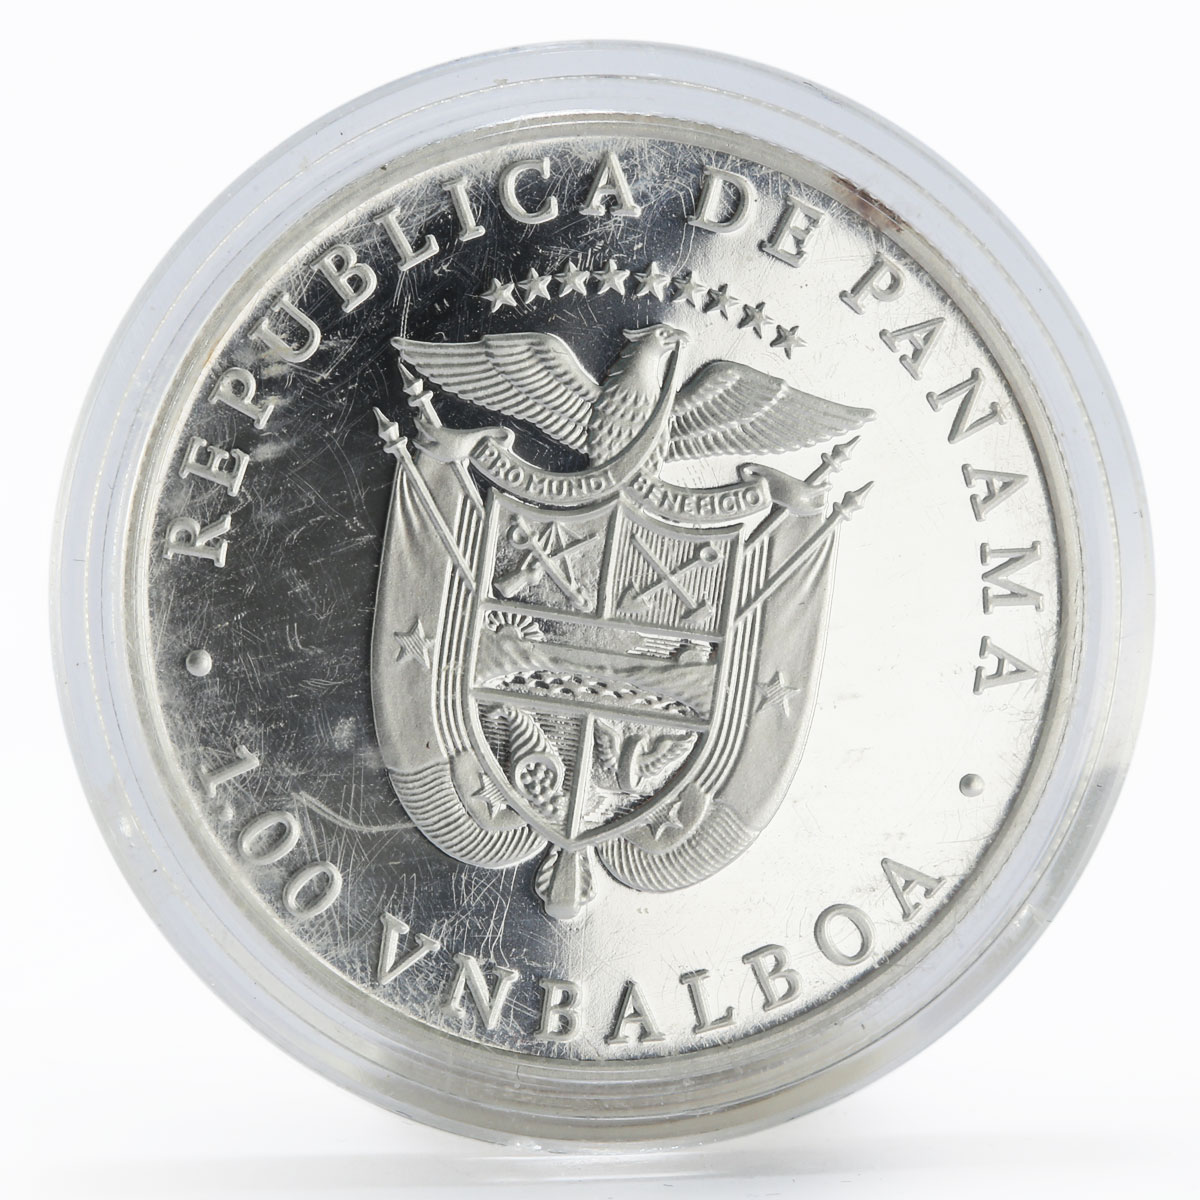 Panama 1 balboa Olympic Winter Games Calgary Biathlon proof silver coin 1988